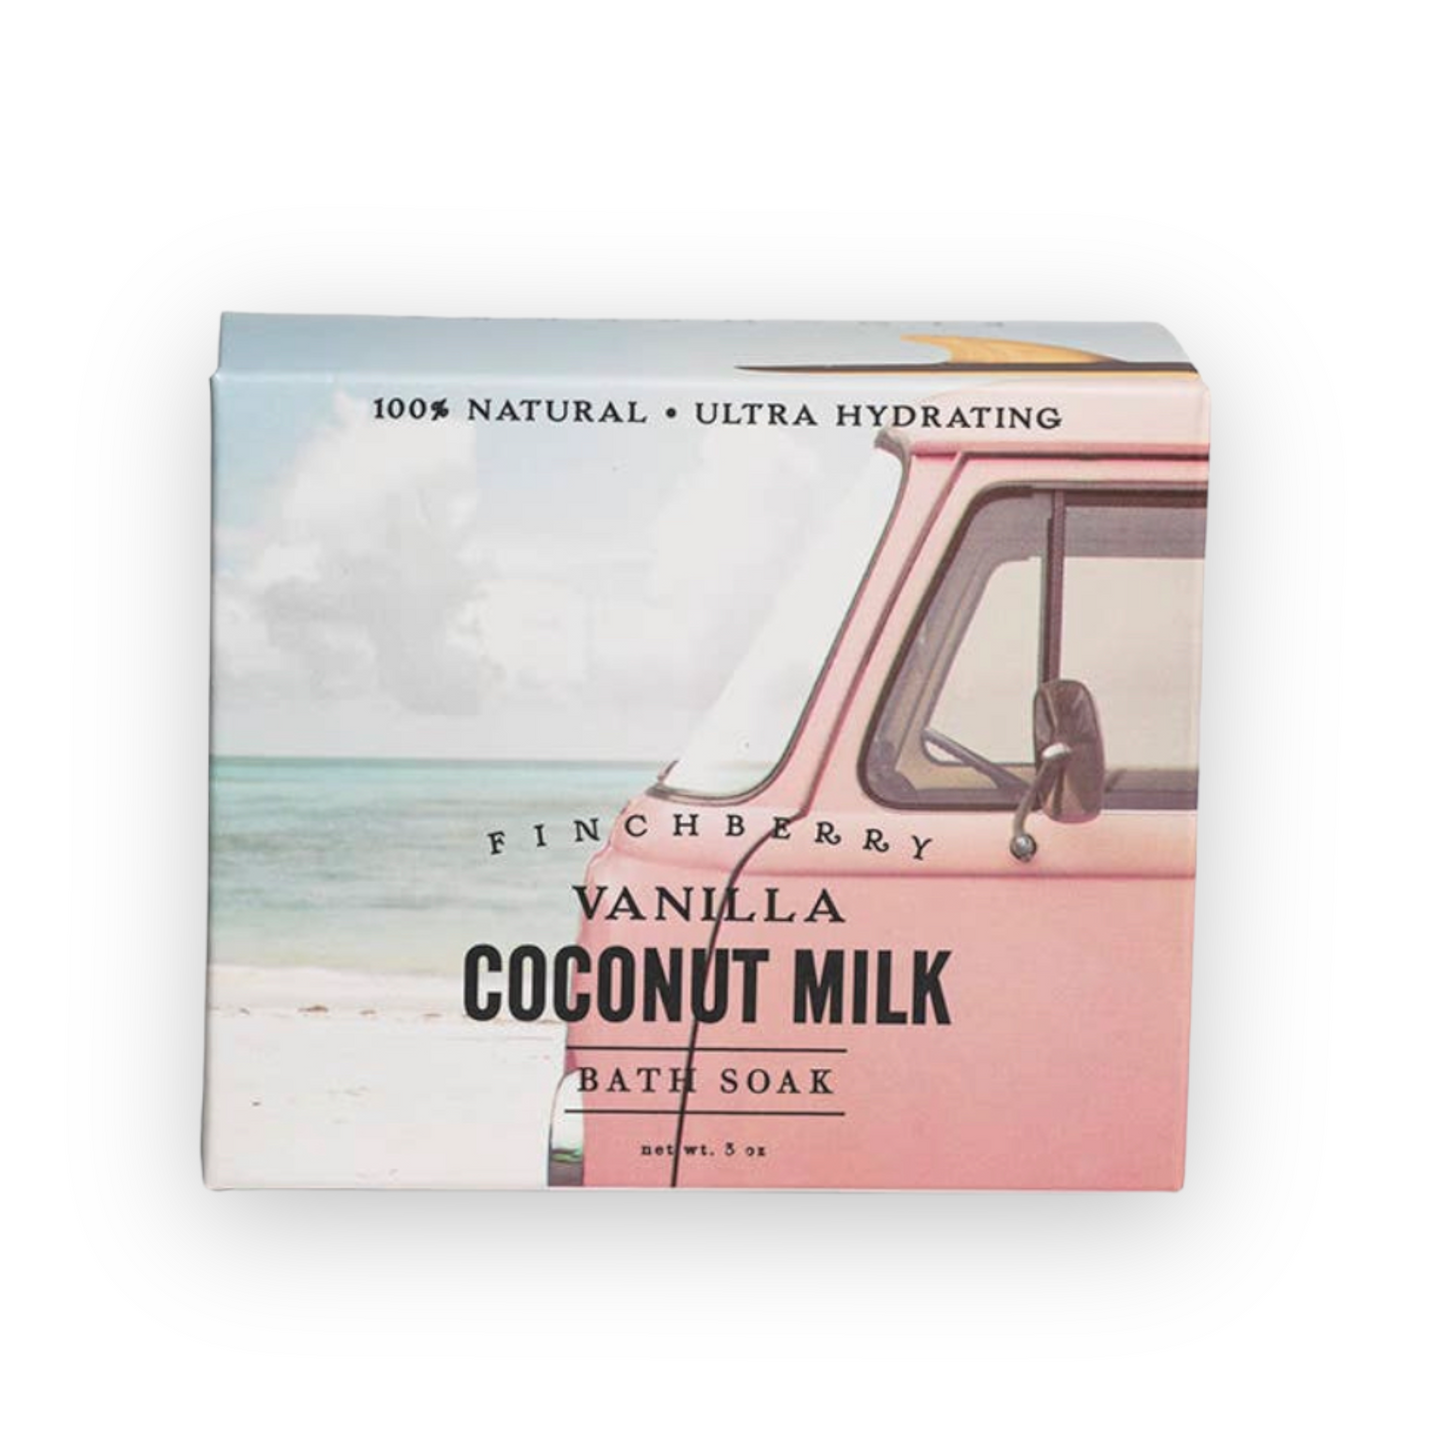 Finchberry Vanilla Coconut Milk Bath Soak